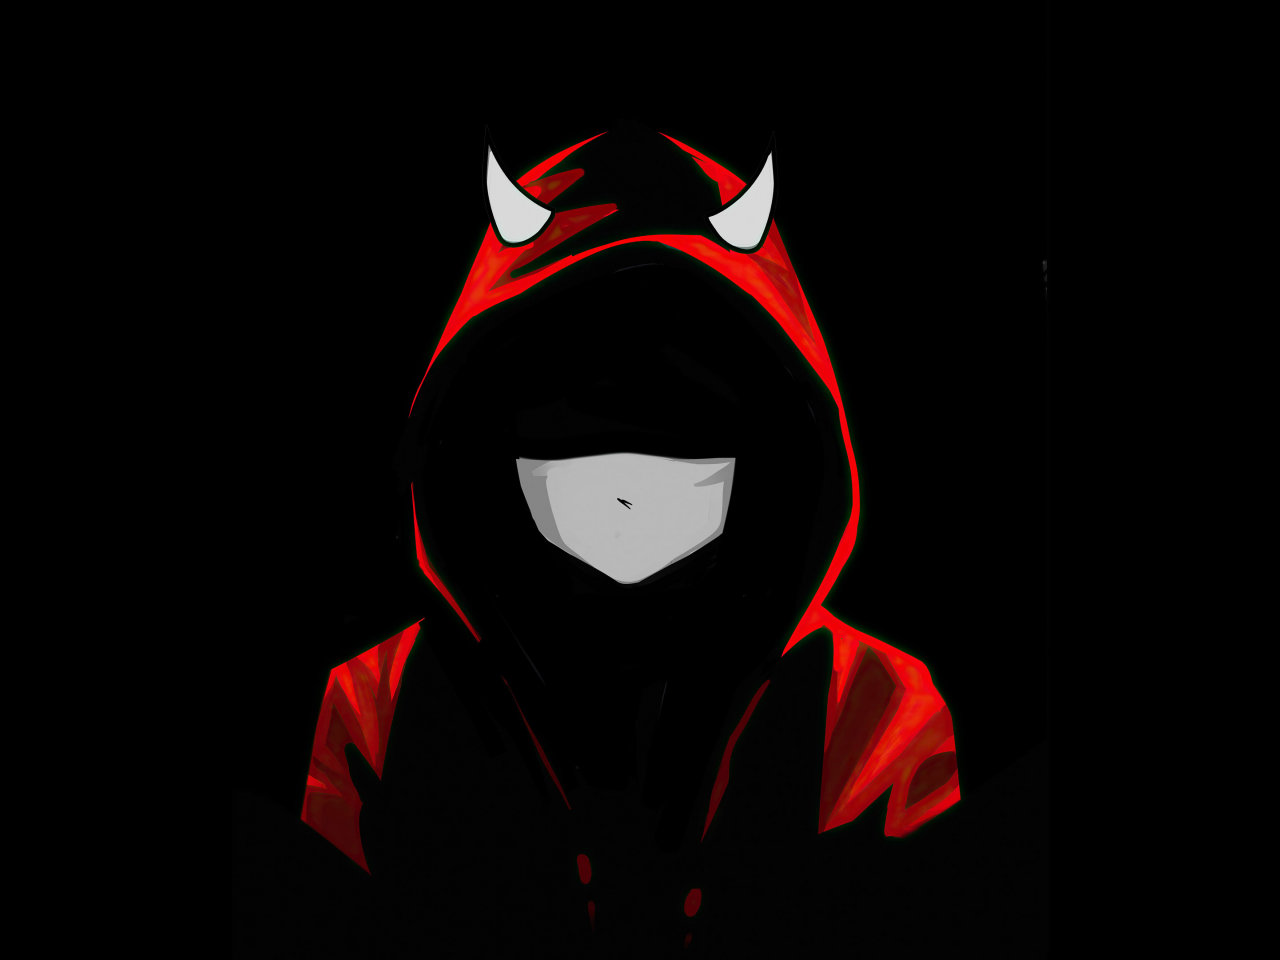 Download wallpaper 1280x960 devil boy in mask, red hoodie, dark, standard  4:3 fullscreen 1280x960 hd background, 25947